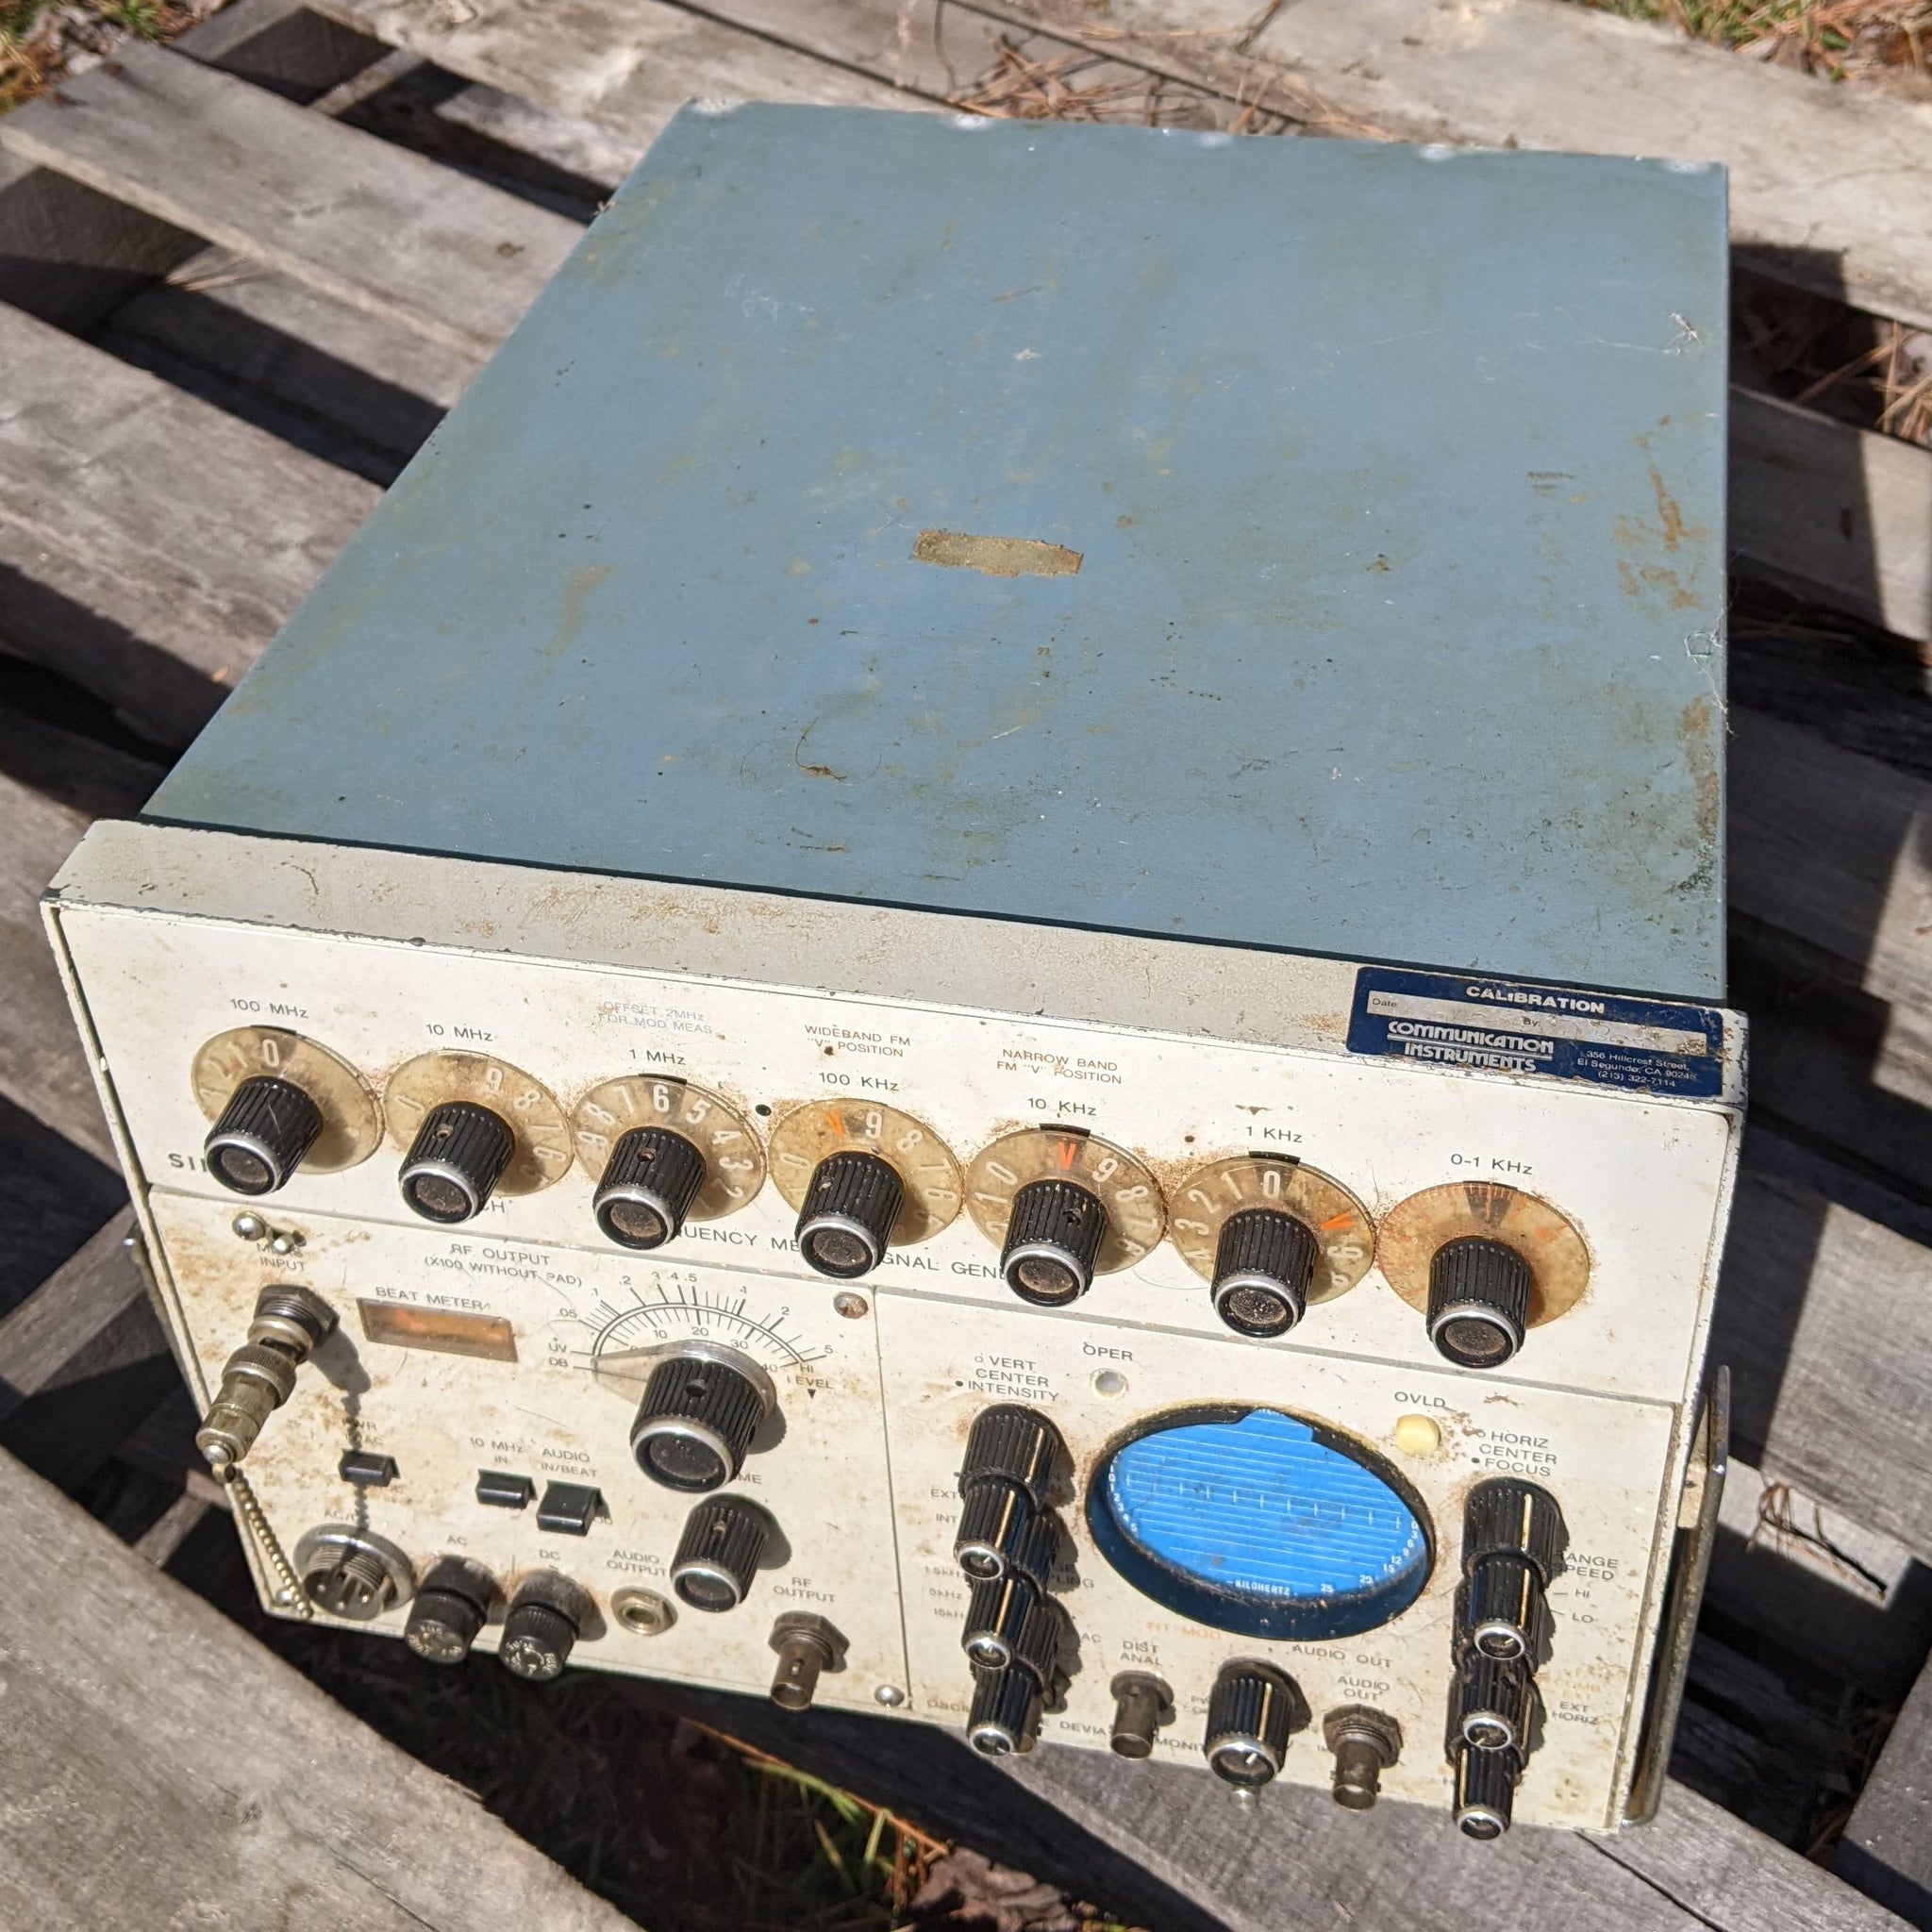 Singer Gertsch FM-10 Frequency Meter / Signal Generator, Parts Only